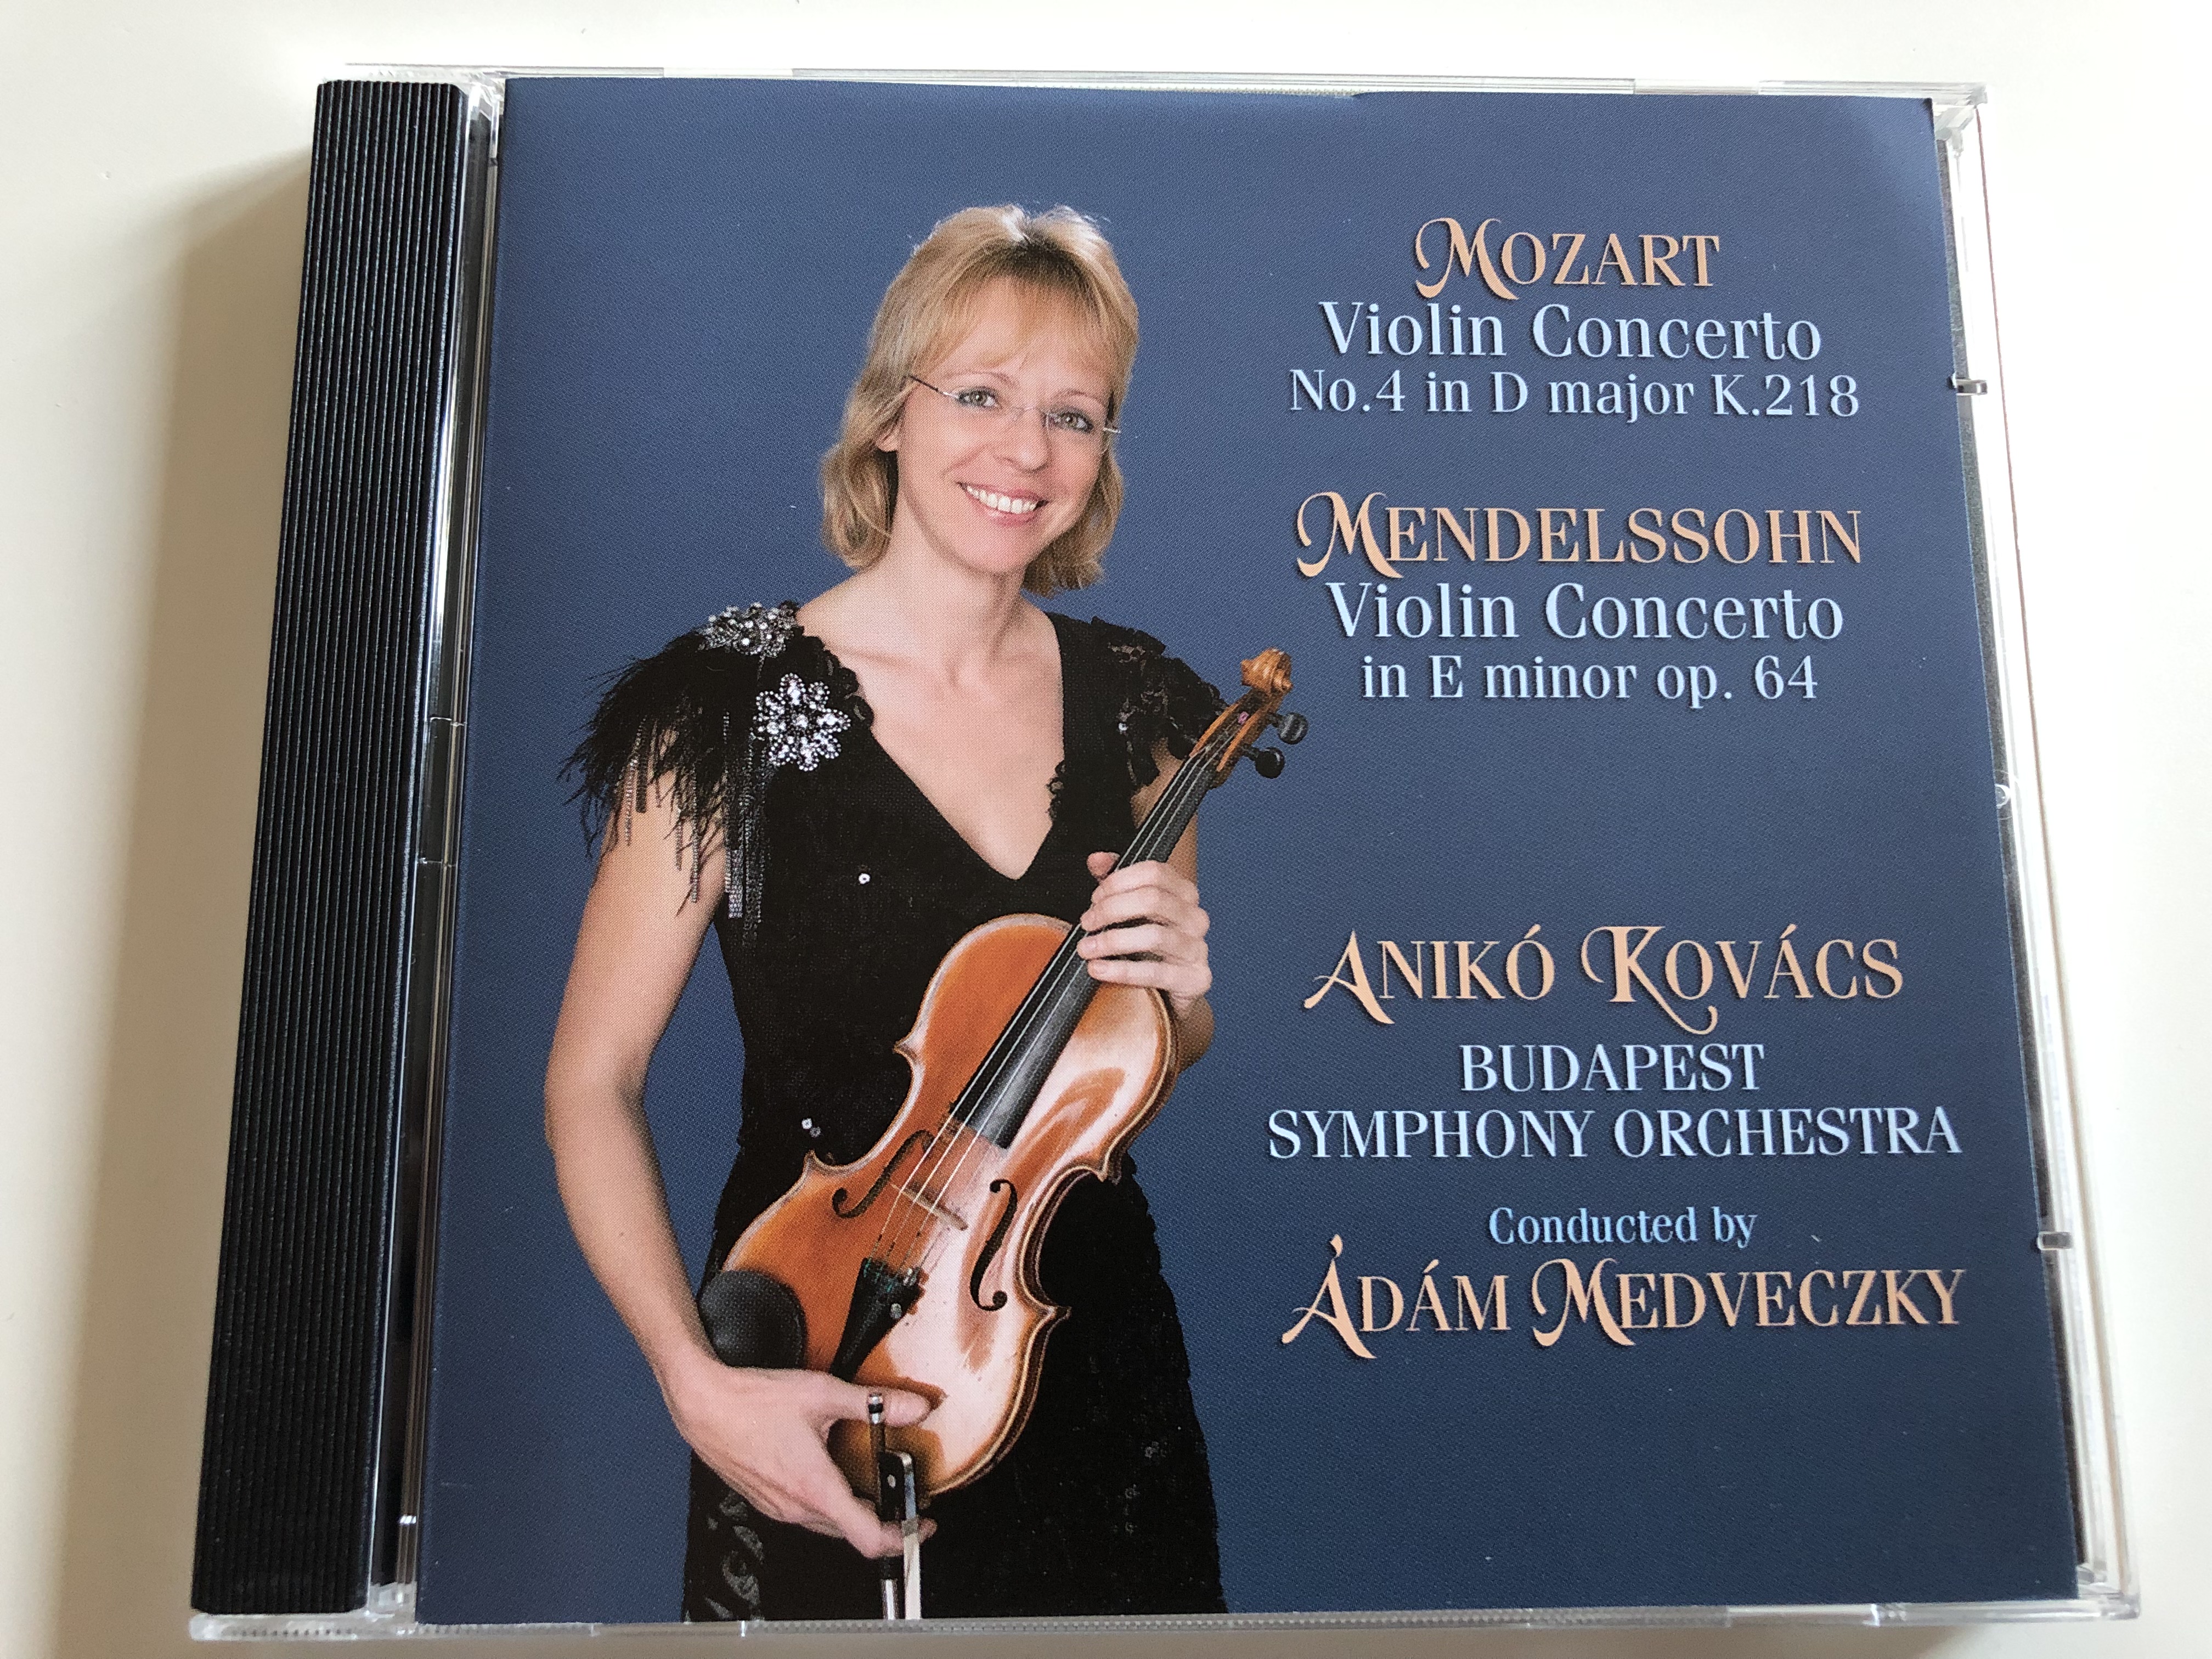 mozart-violin-concerto-no.-4-in-d-major-k.-218-mendelssohn-violin-concerto-in-e-minor-op.-64-aniko-kovacs-budapest-symphony-orchestra-conducted-by-adam-medveczky-hungaroton-classic-audio-cd-2-1-.jpg